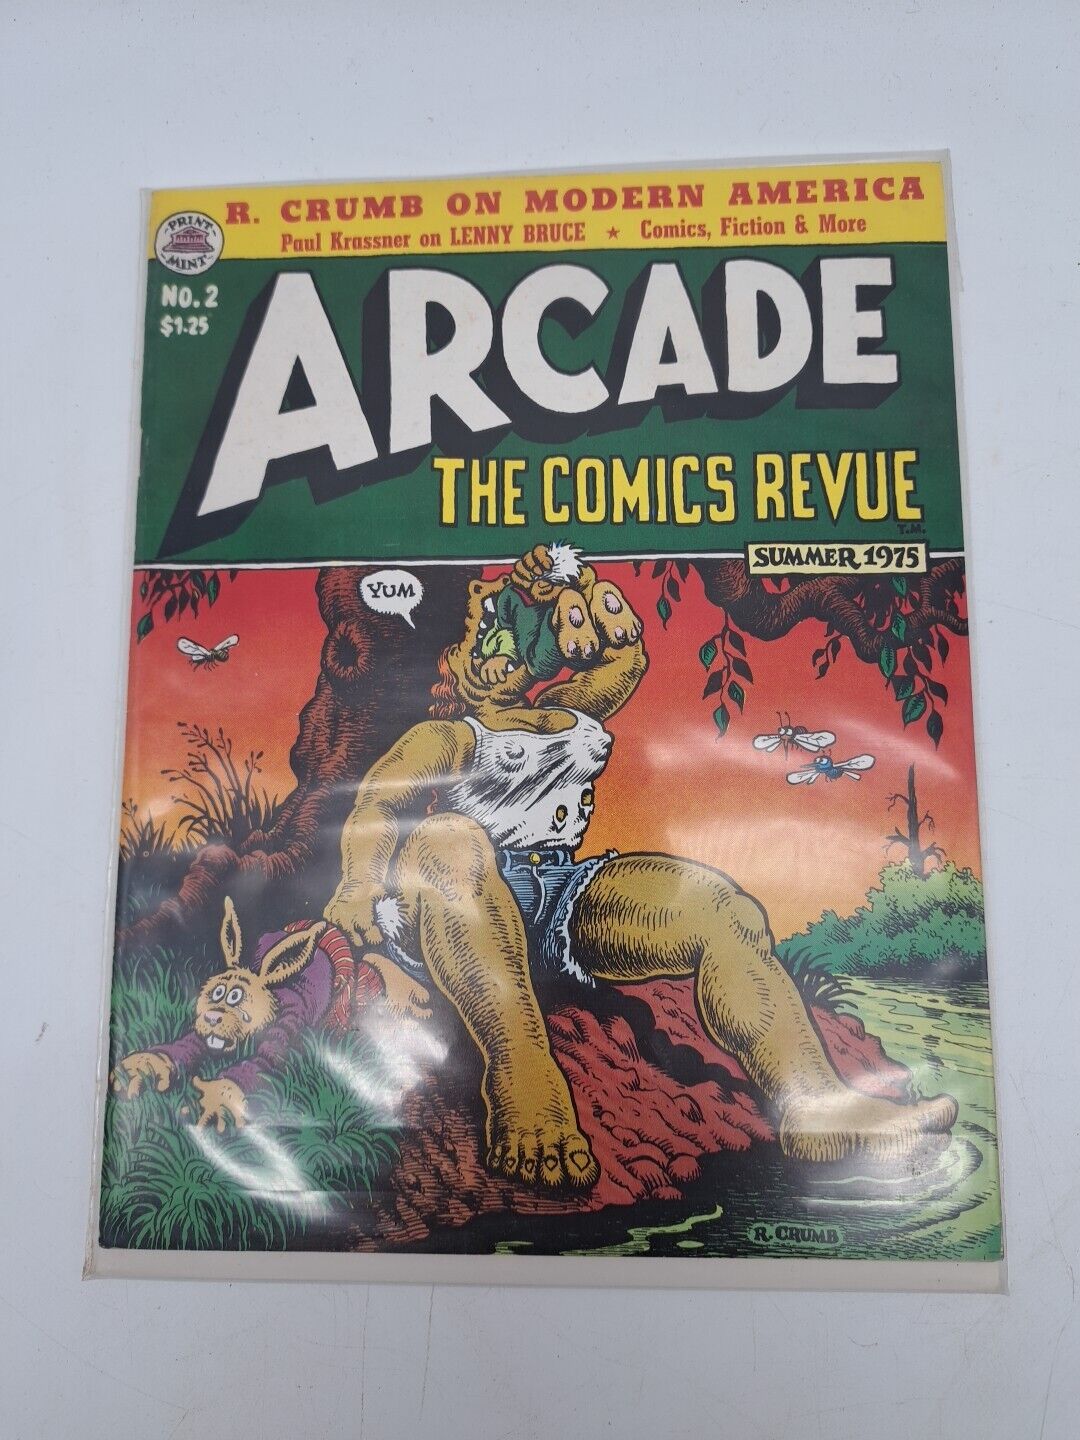 ARCADE The Comics Revue #2 1975 1st Print CRUMB Wilson Print Mint Boarded Sealed